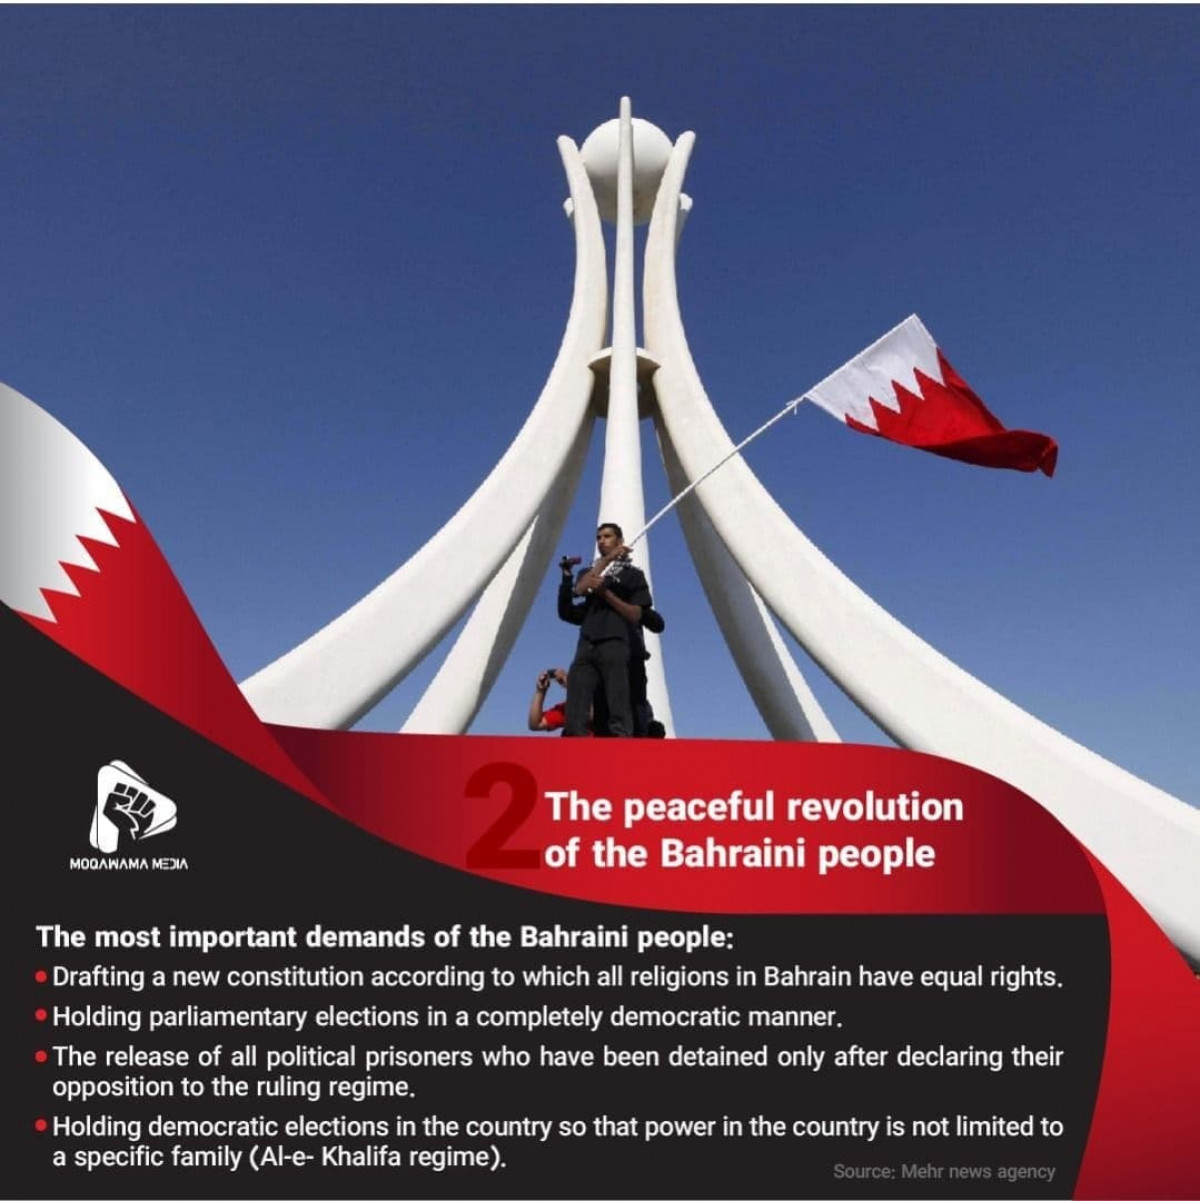 The peaceful revolution of the Bahraini people1